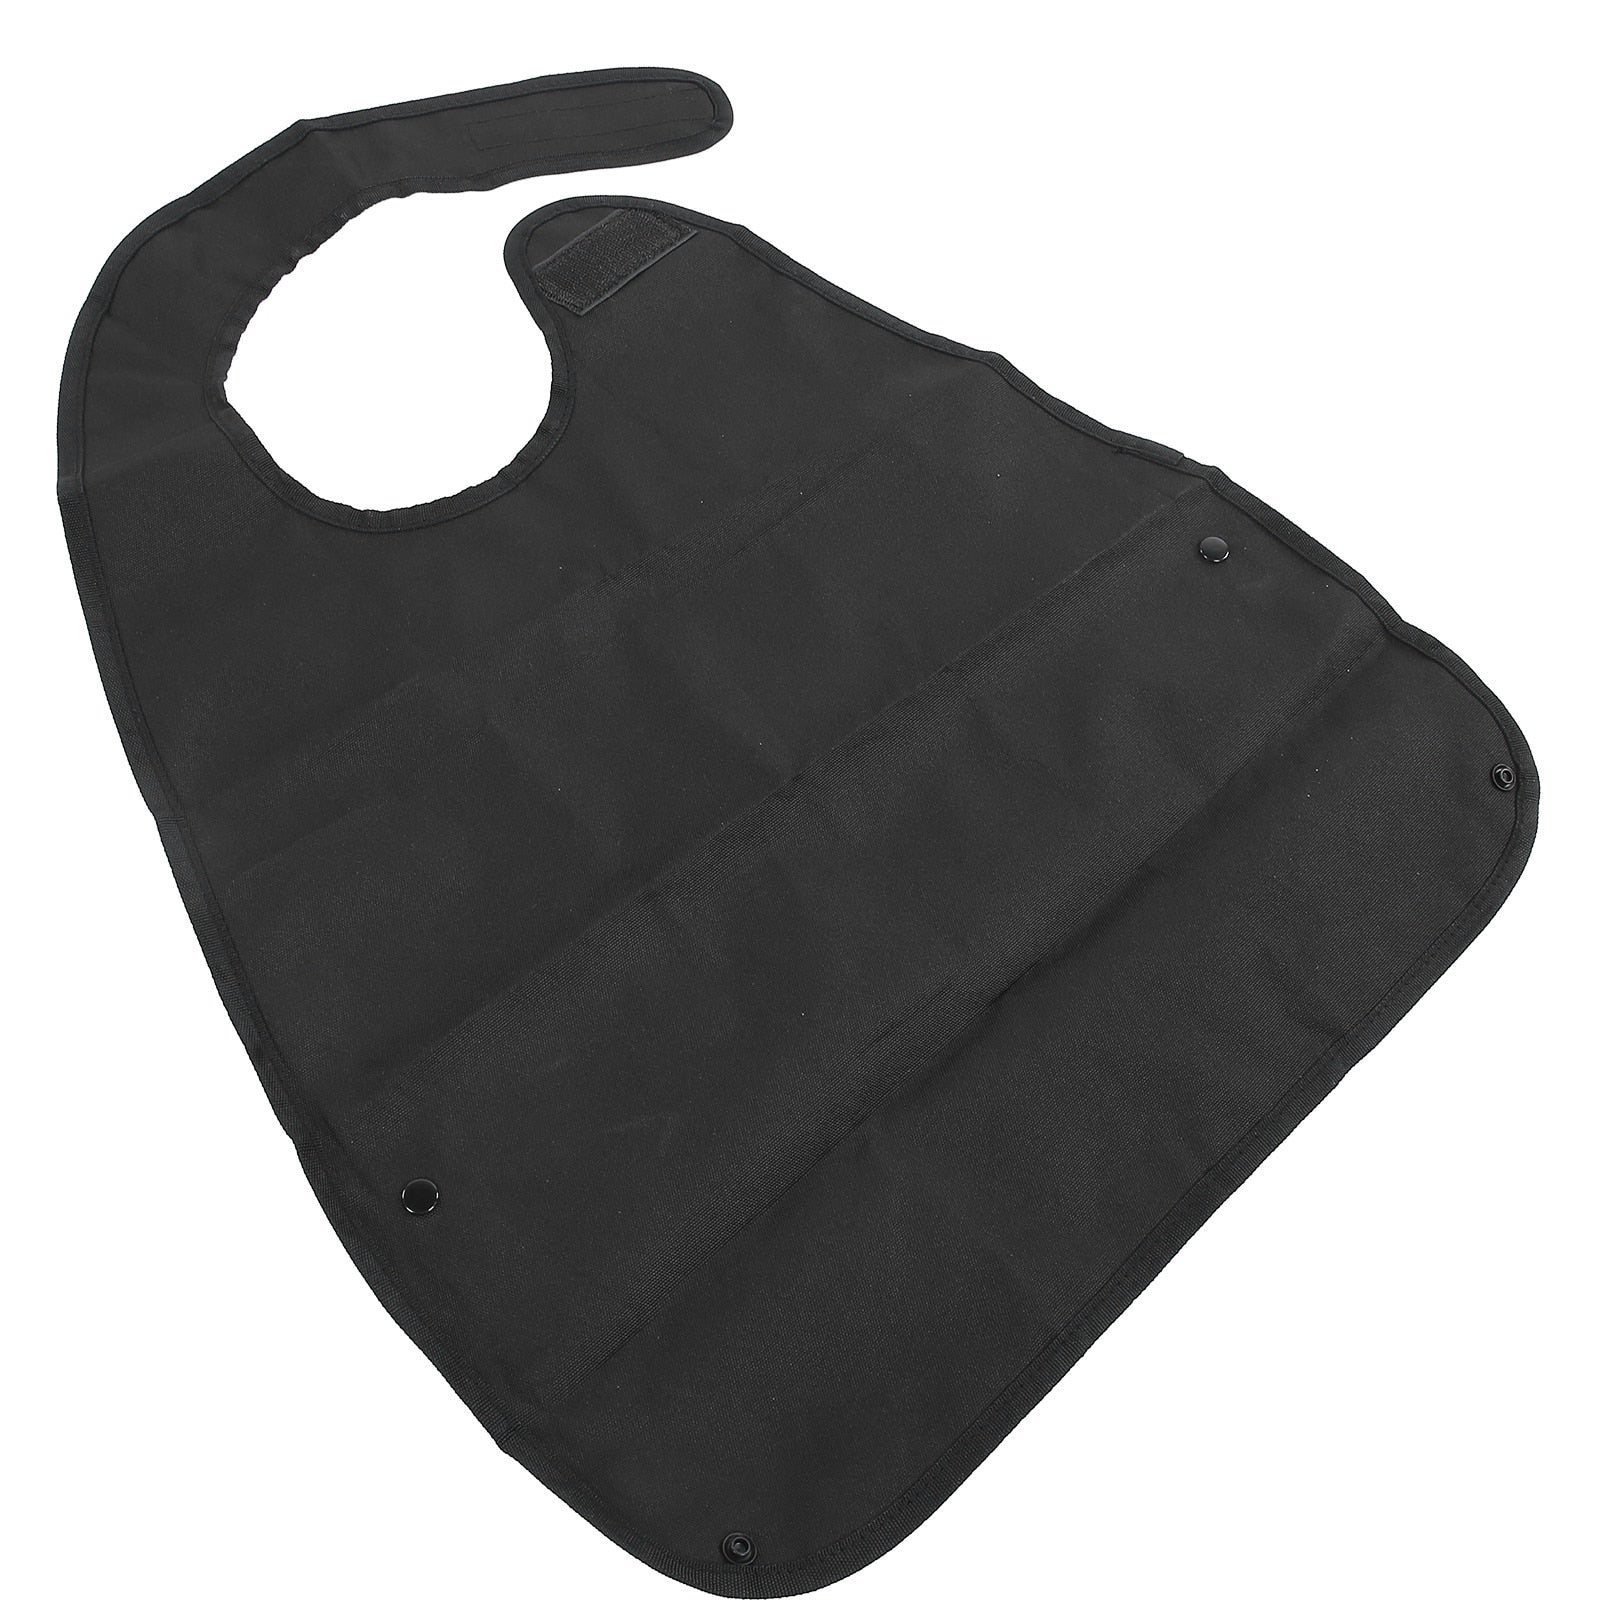 Waterproof Adult Bib - Long Clothing Protector for Elderly Dining